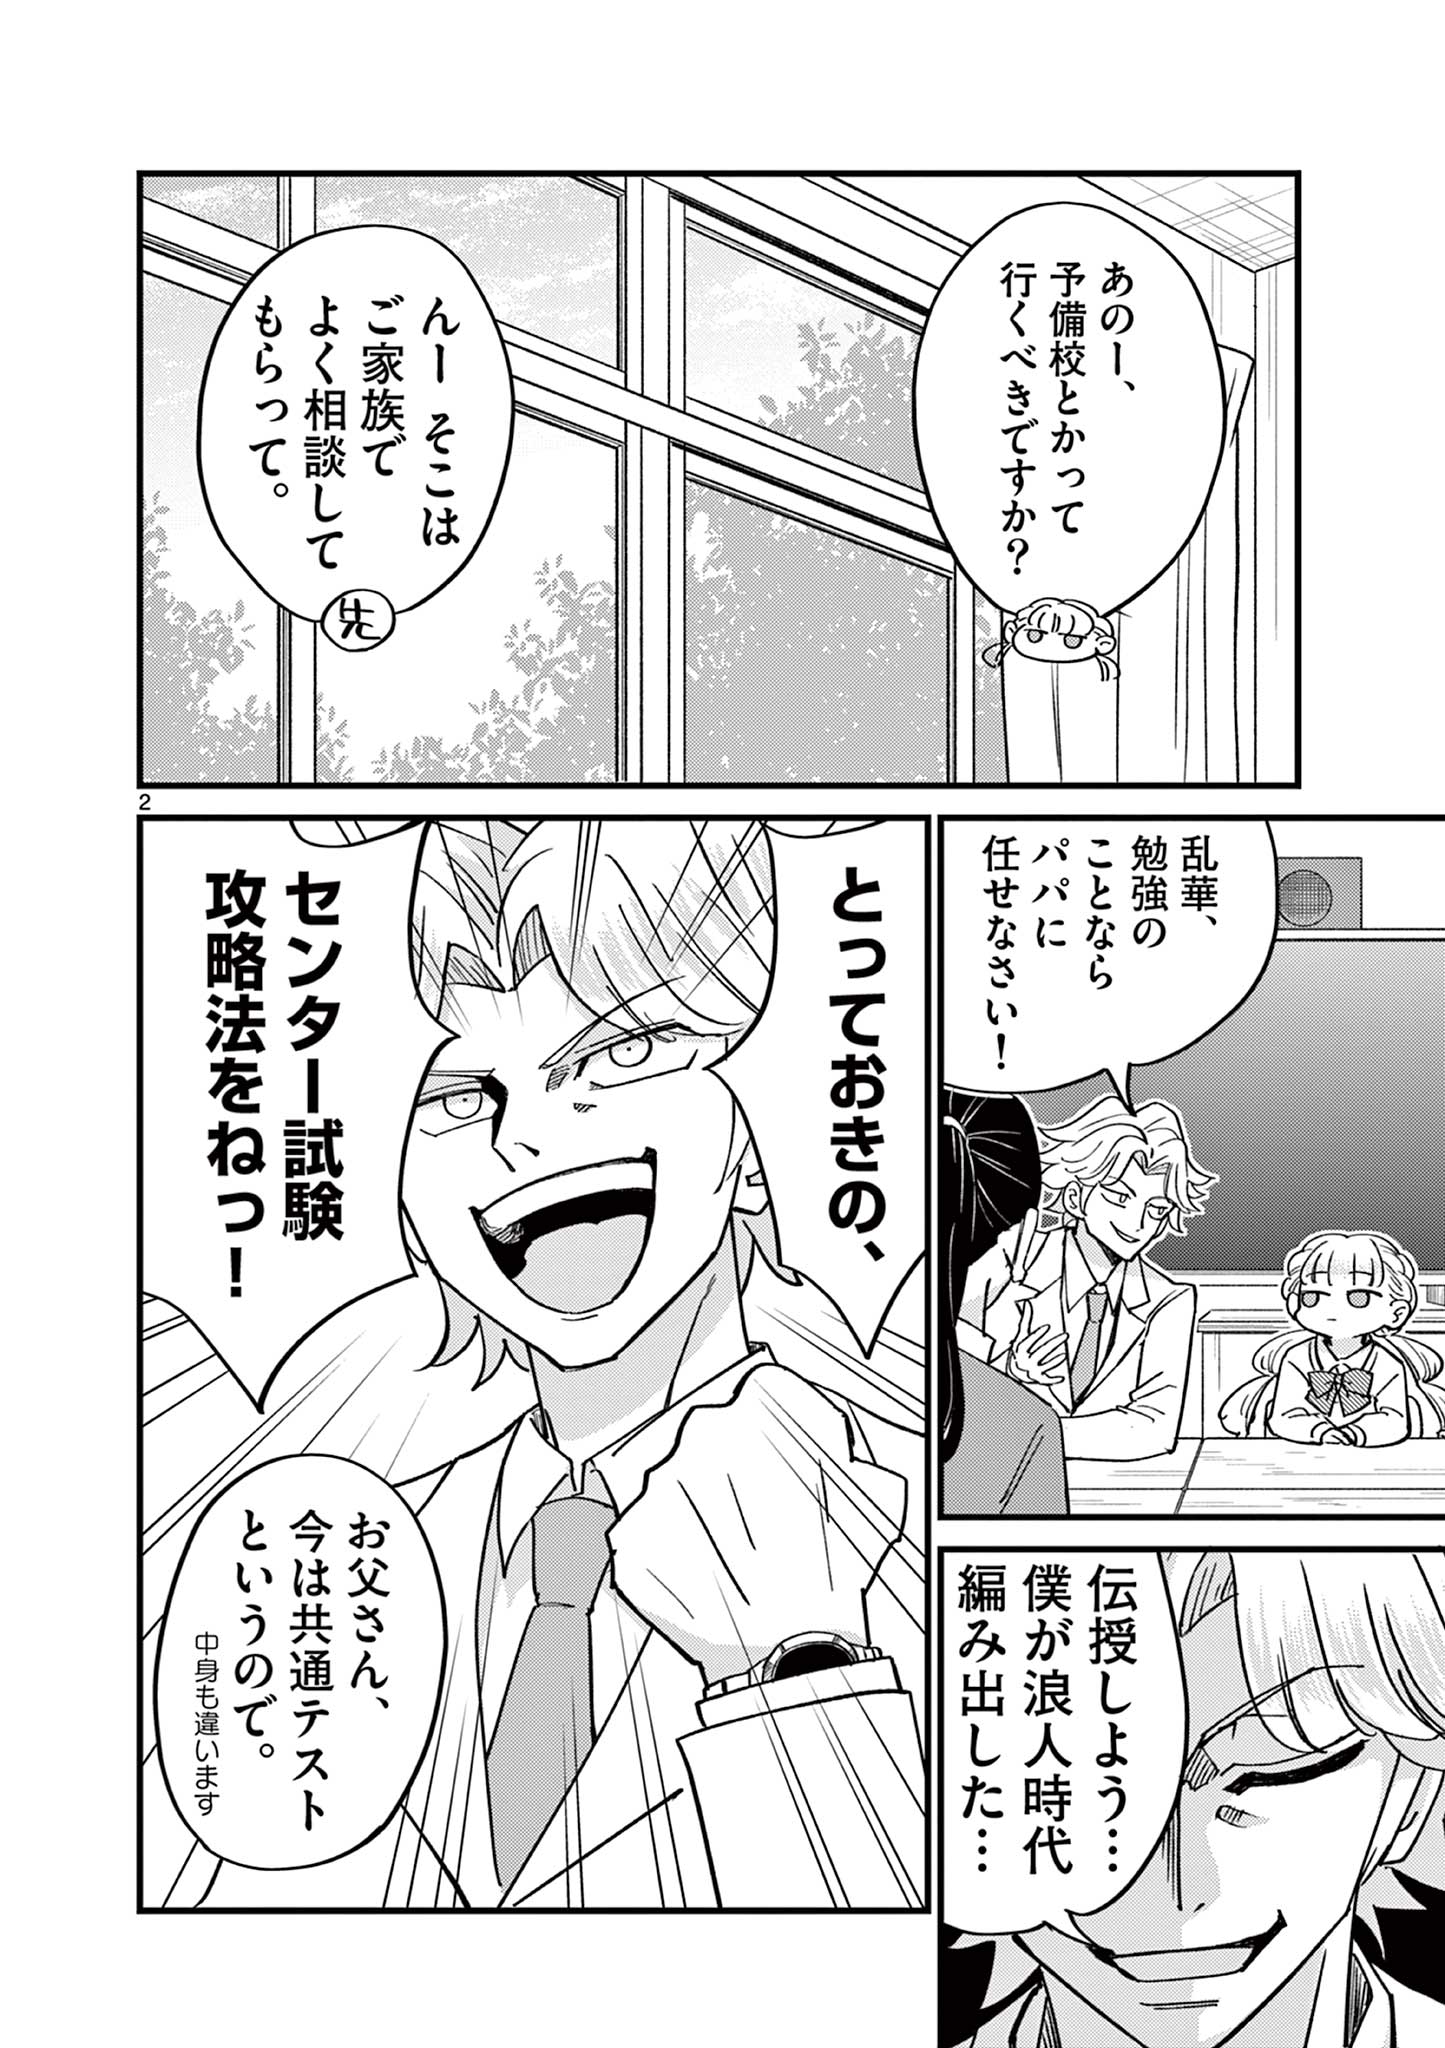 Ranka-chan wa Bitch ni Naritai - Chapter 20 - Page 2